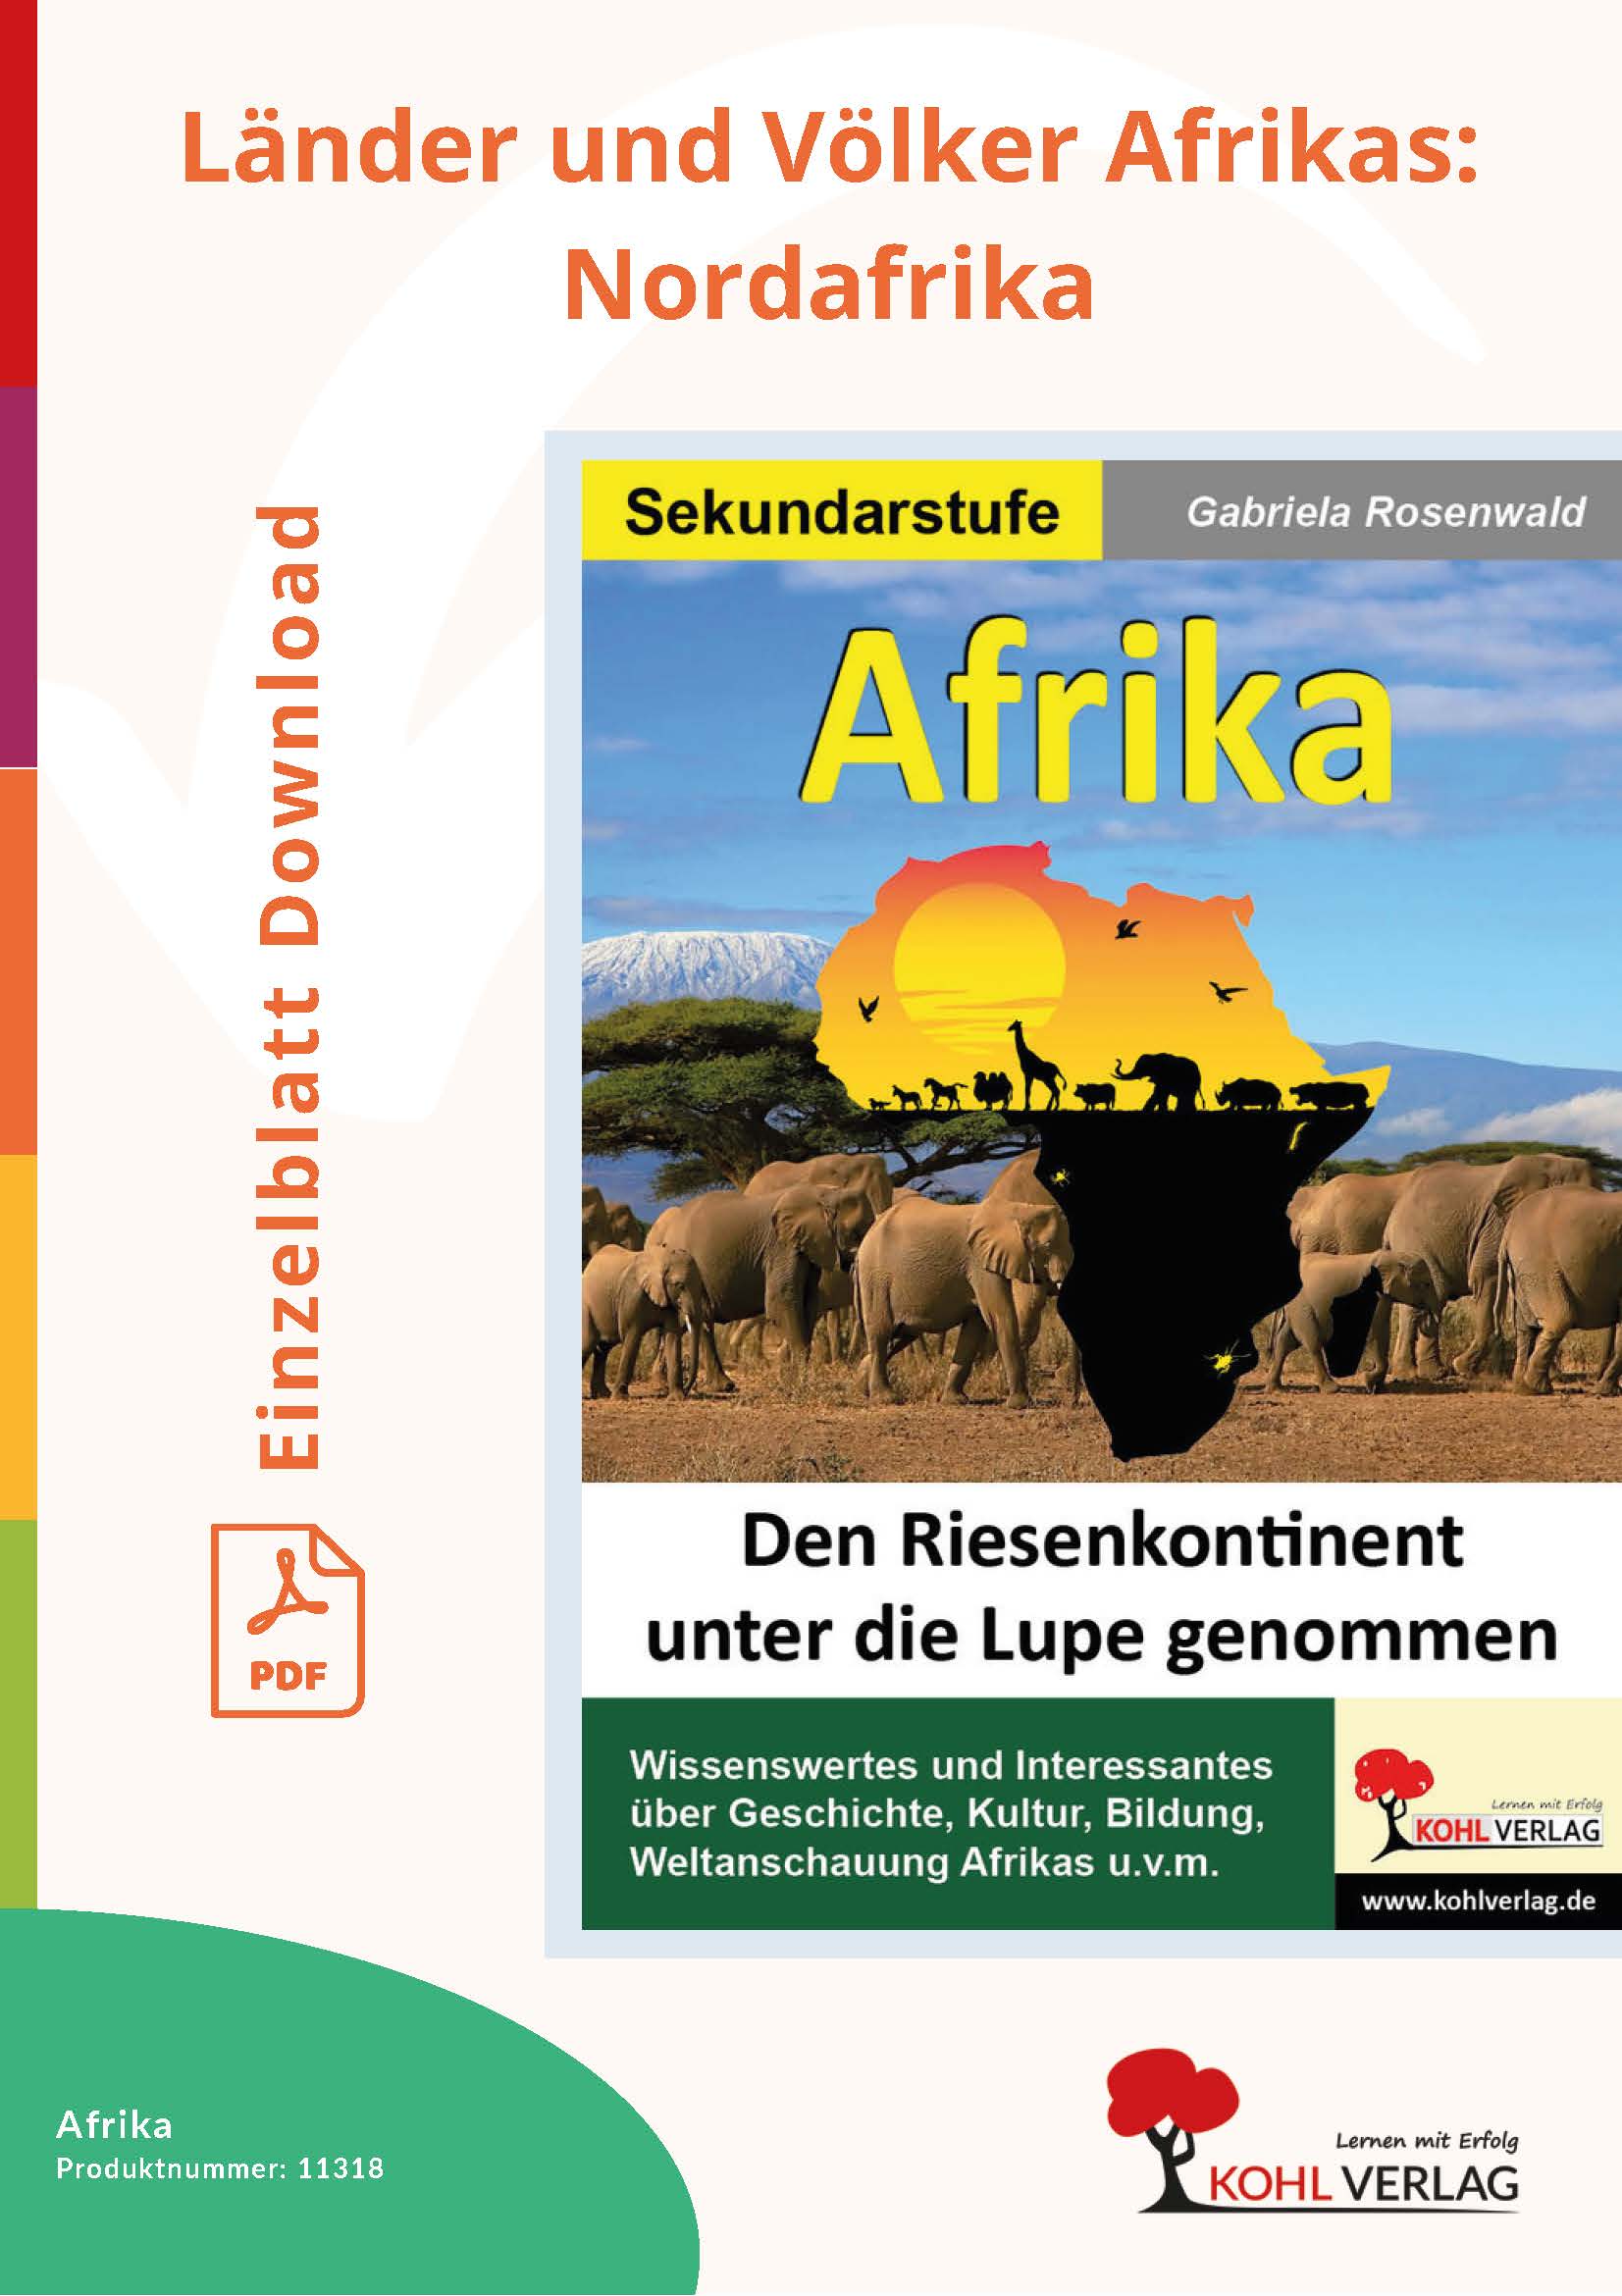 Afrika - Länder und Völker Afrikas: Nordafrika